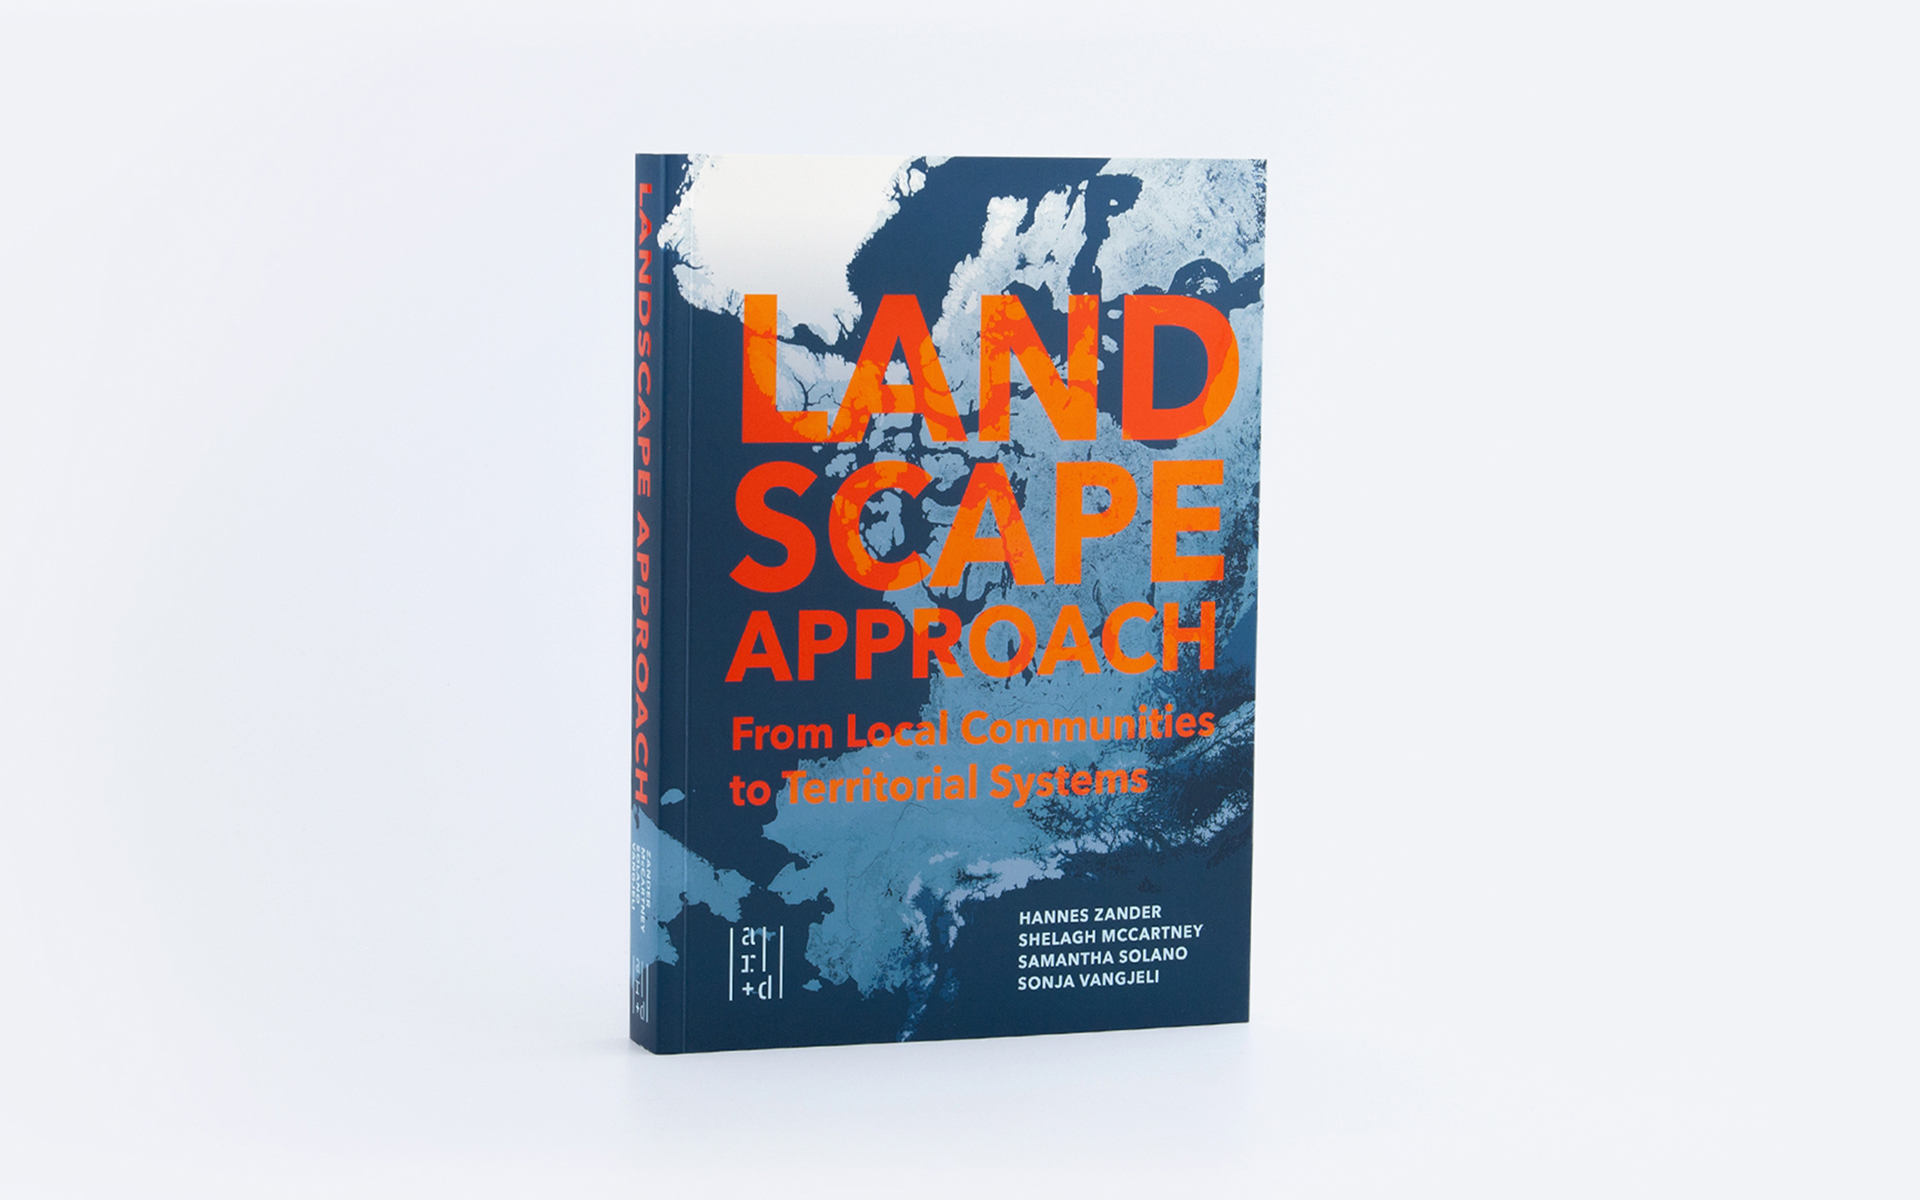 A Landscape Approach. Book cover, design by Pablo Mandel.